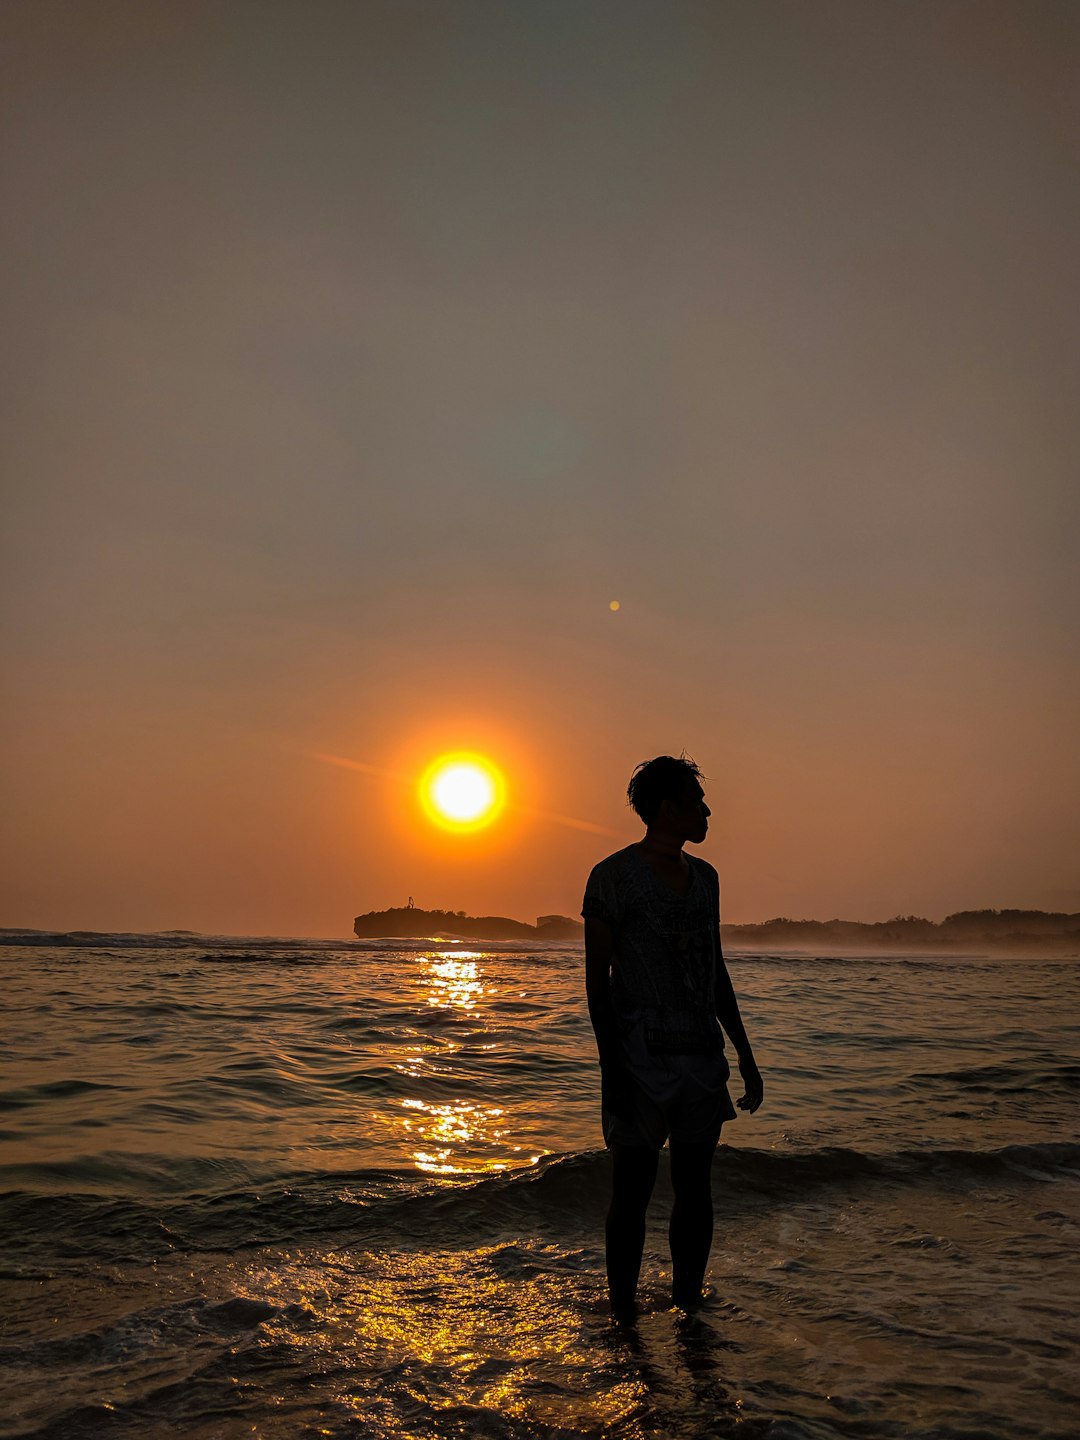 travelers stories about Beach in Pantai Sadranan, Indonesia